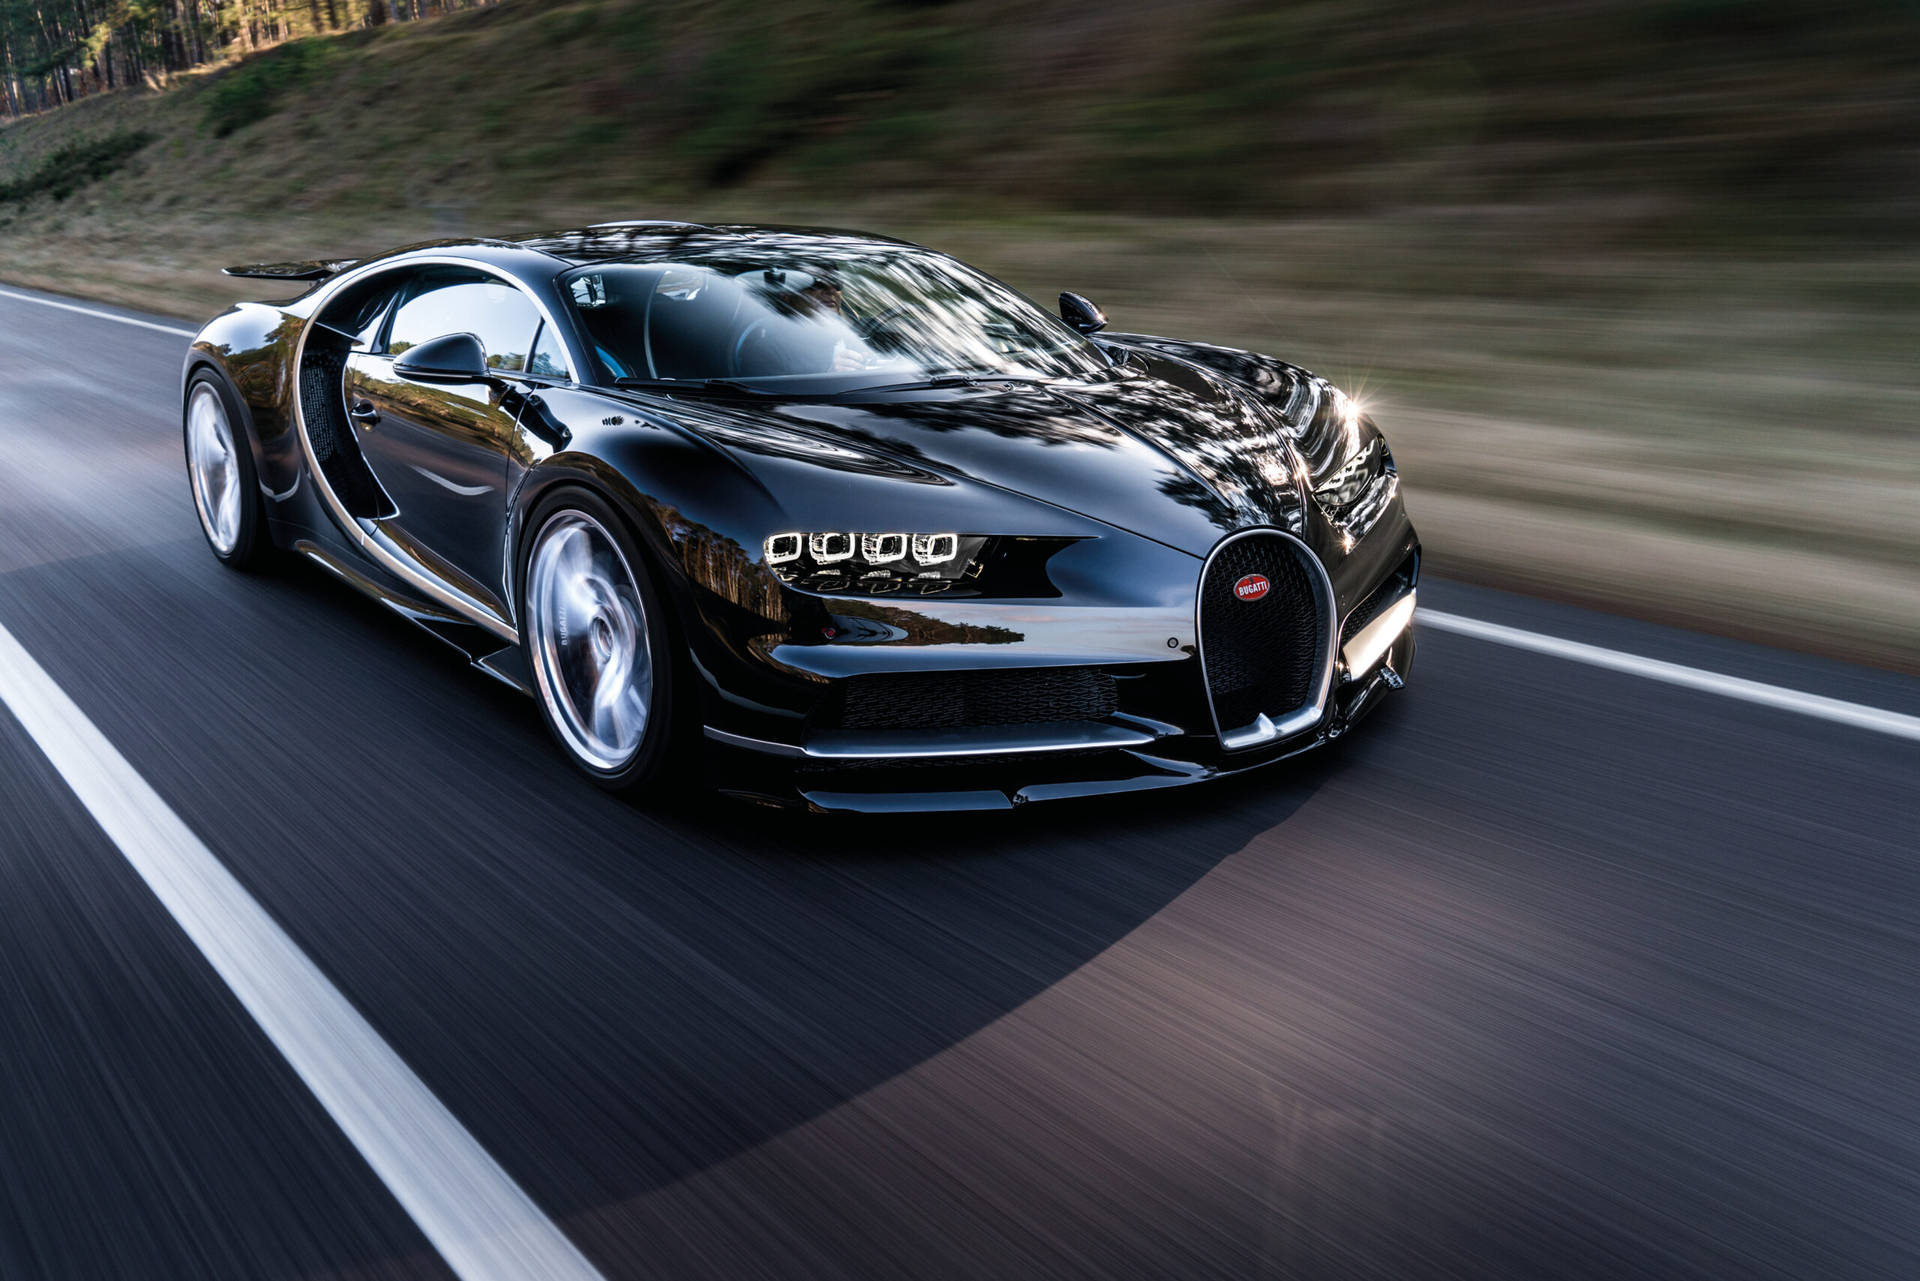 Speeding Cool Bugatti On Road Background